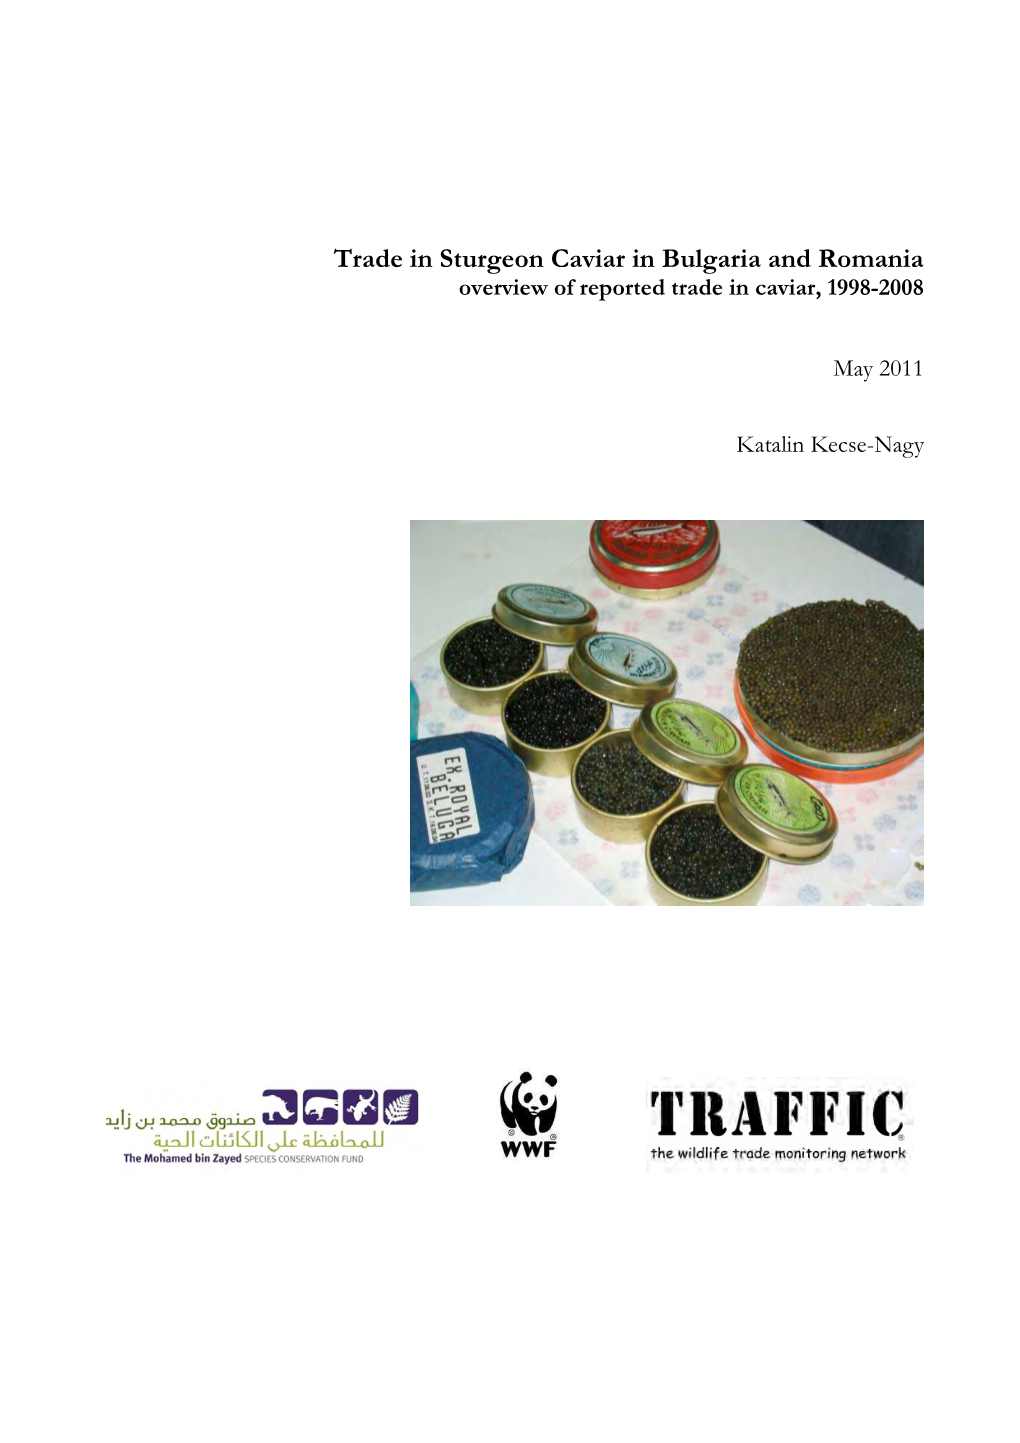 Trade in Sturgeon Caviar in Bulgaria and Romania Overview of Reported Trade in Caviar, 1998-2008